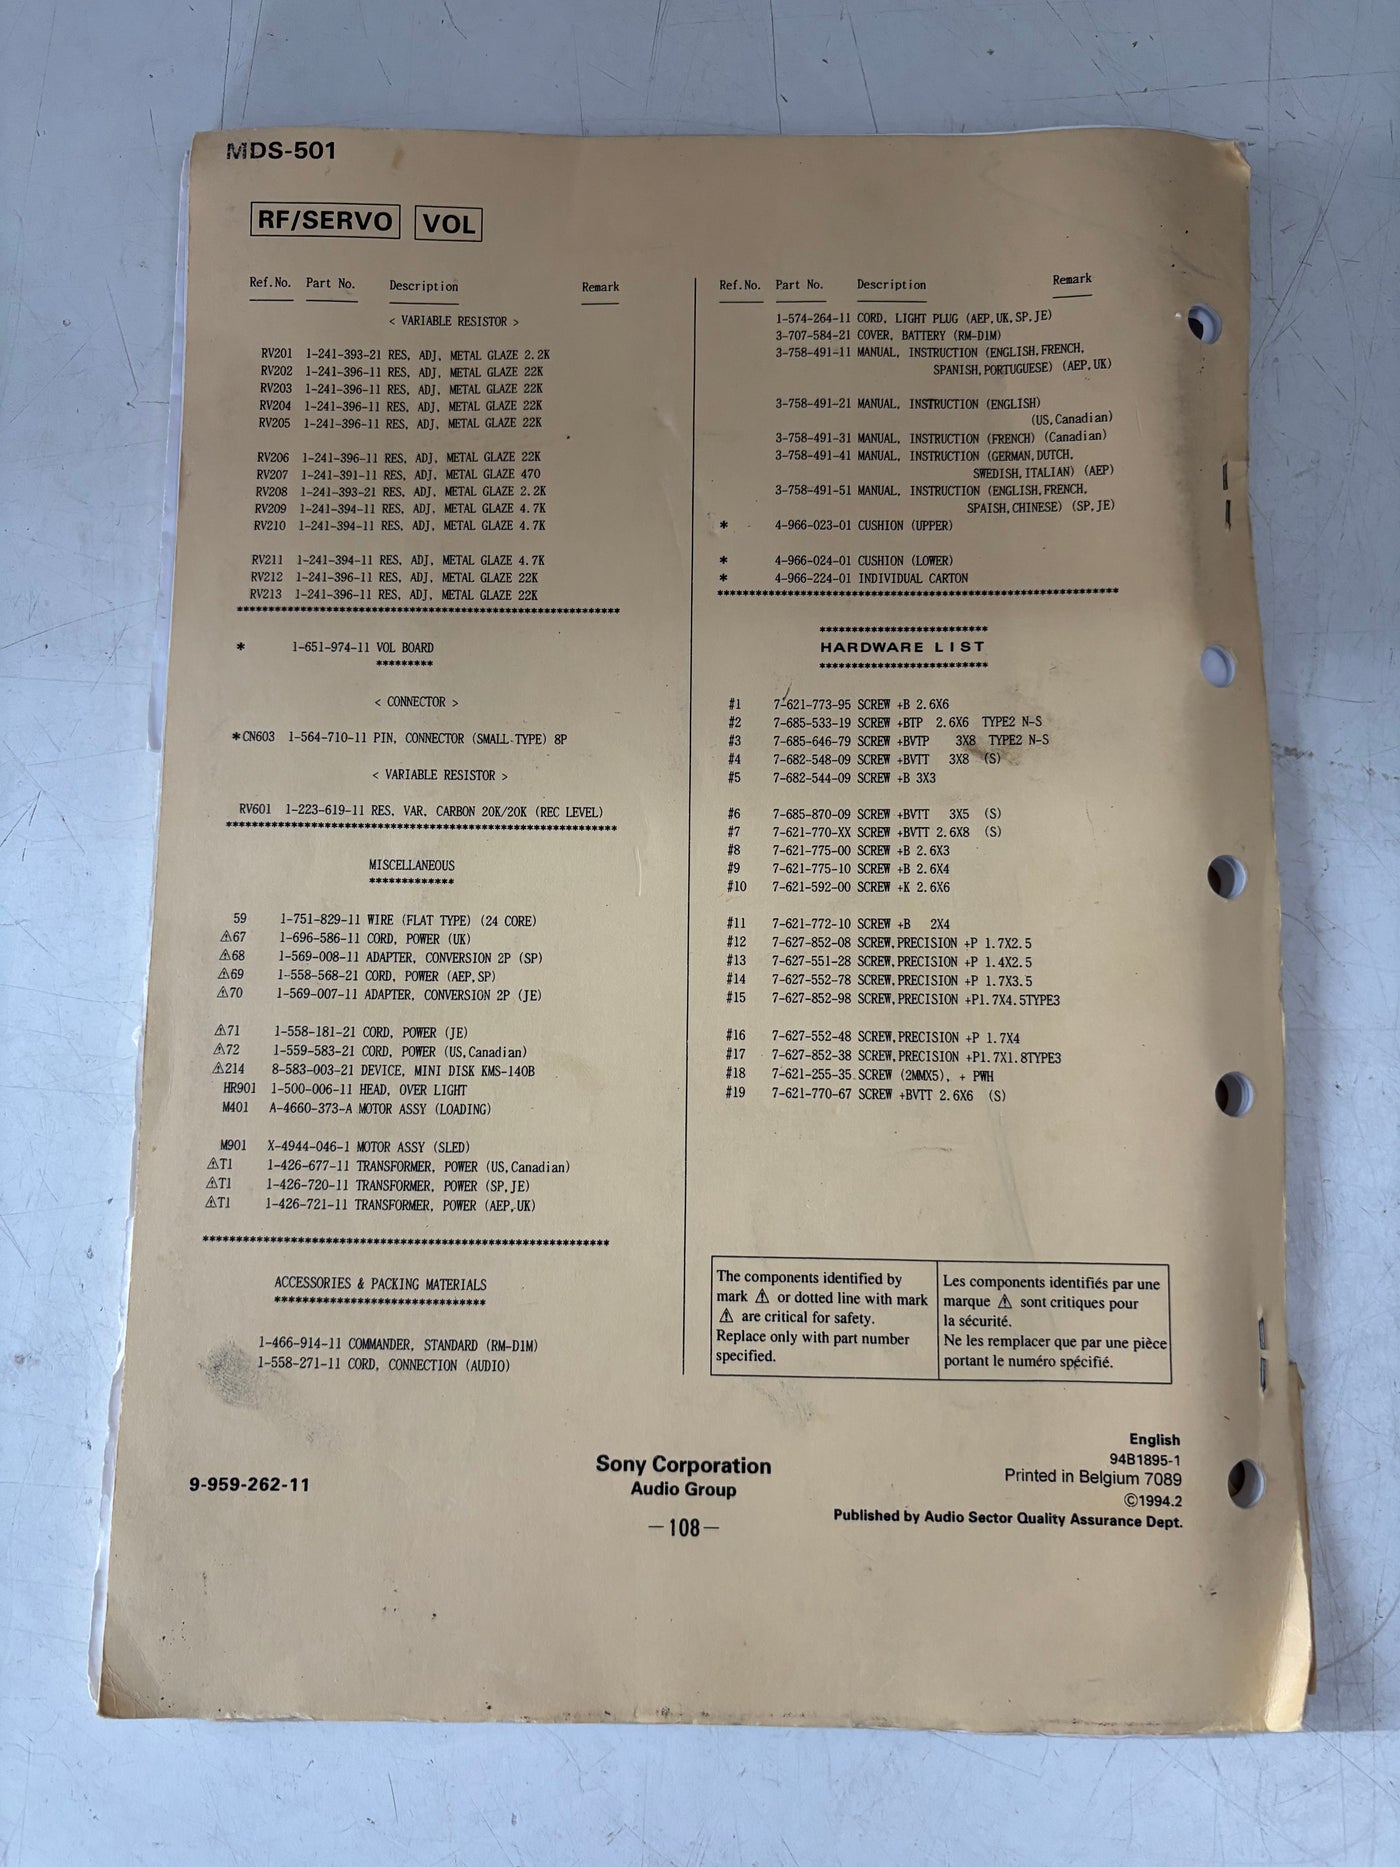 Sony MDS-501 Minidisc Recorder Service Manual